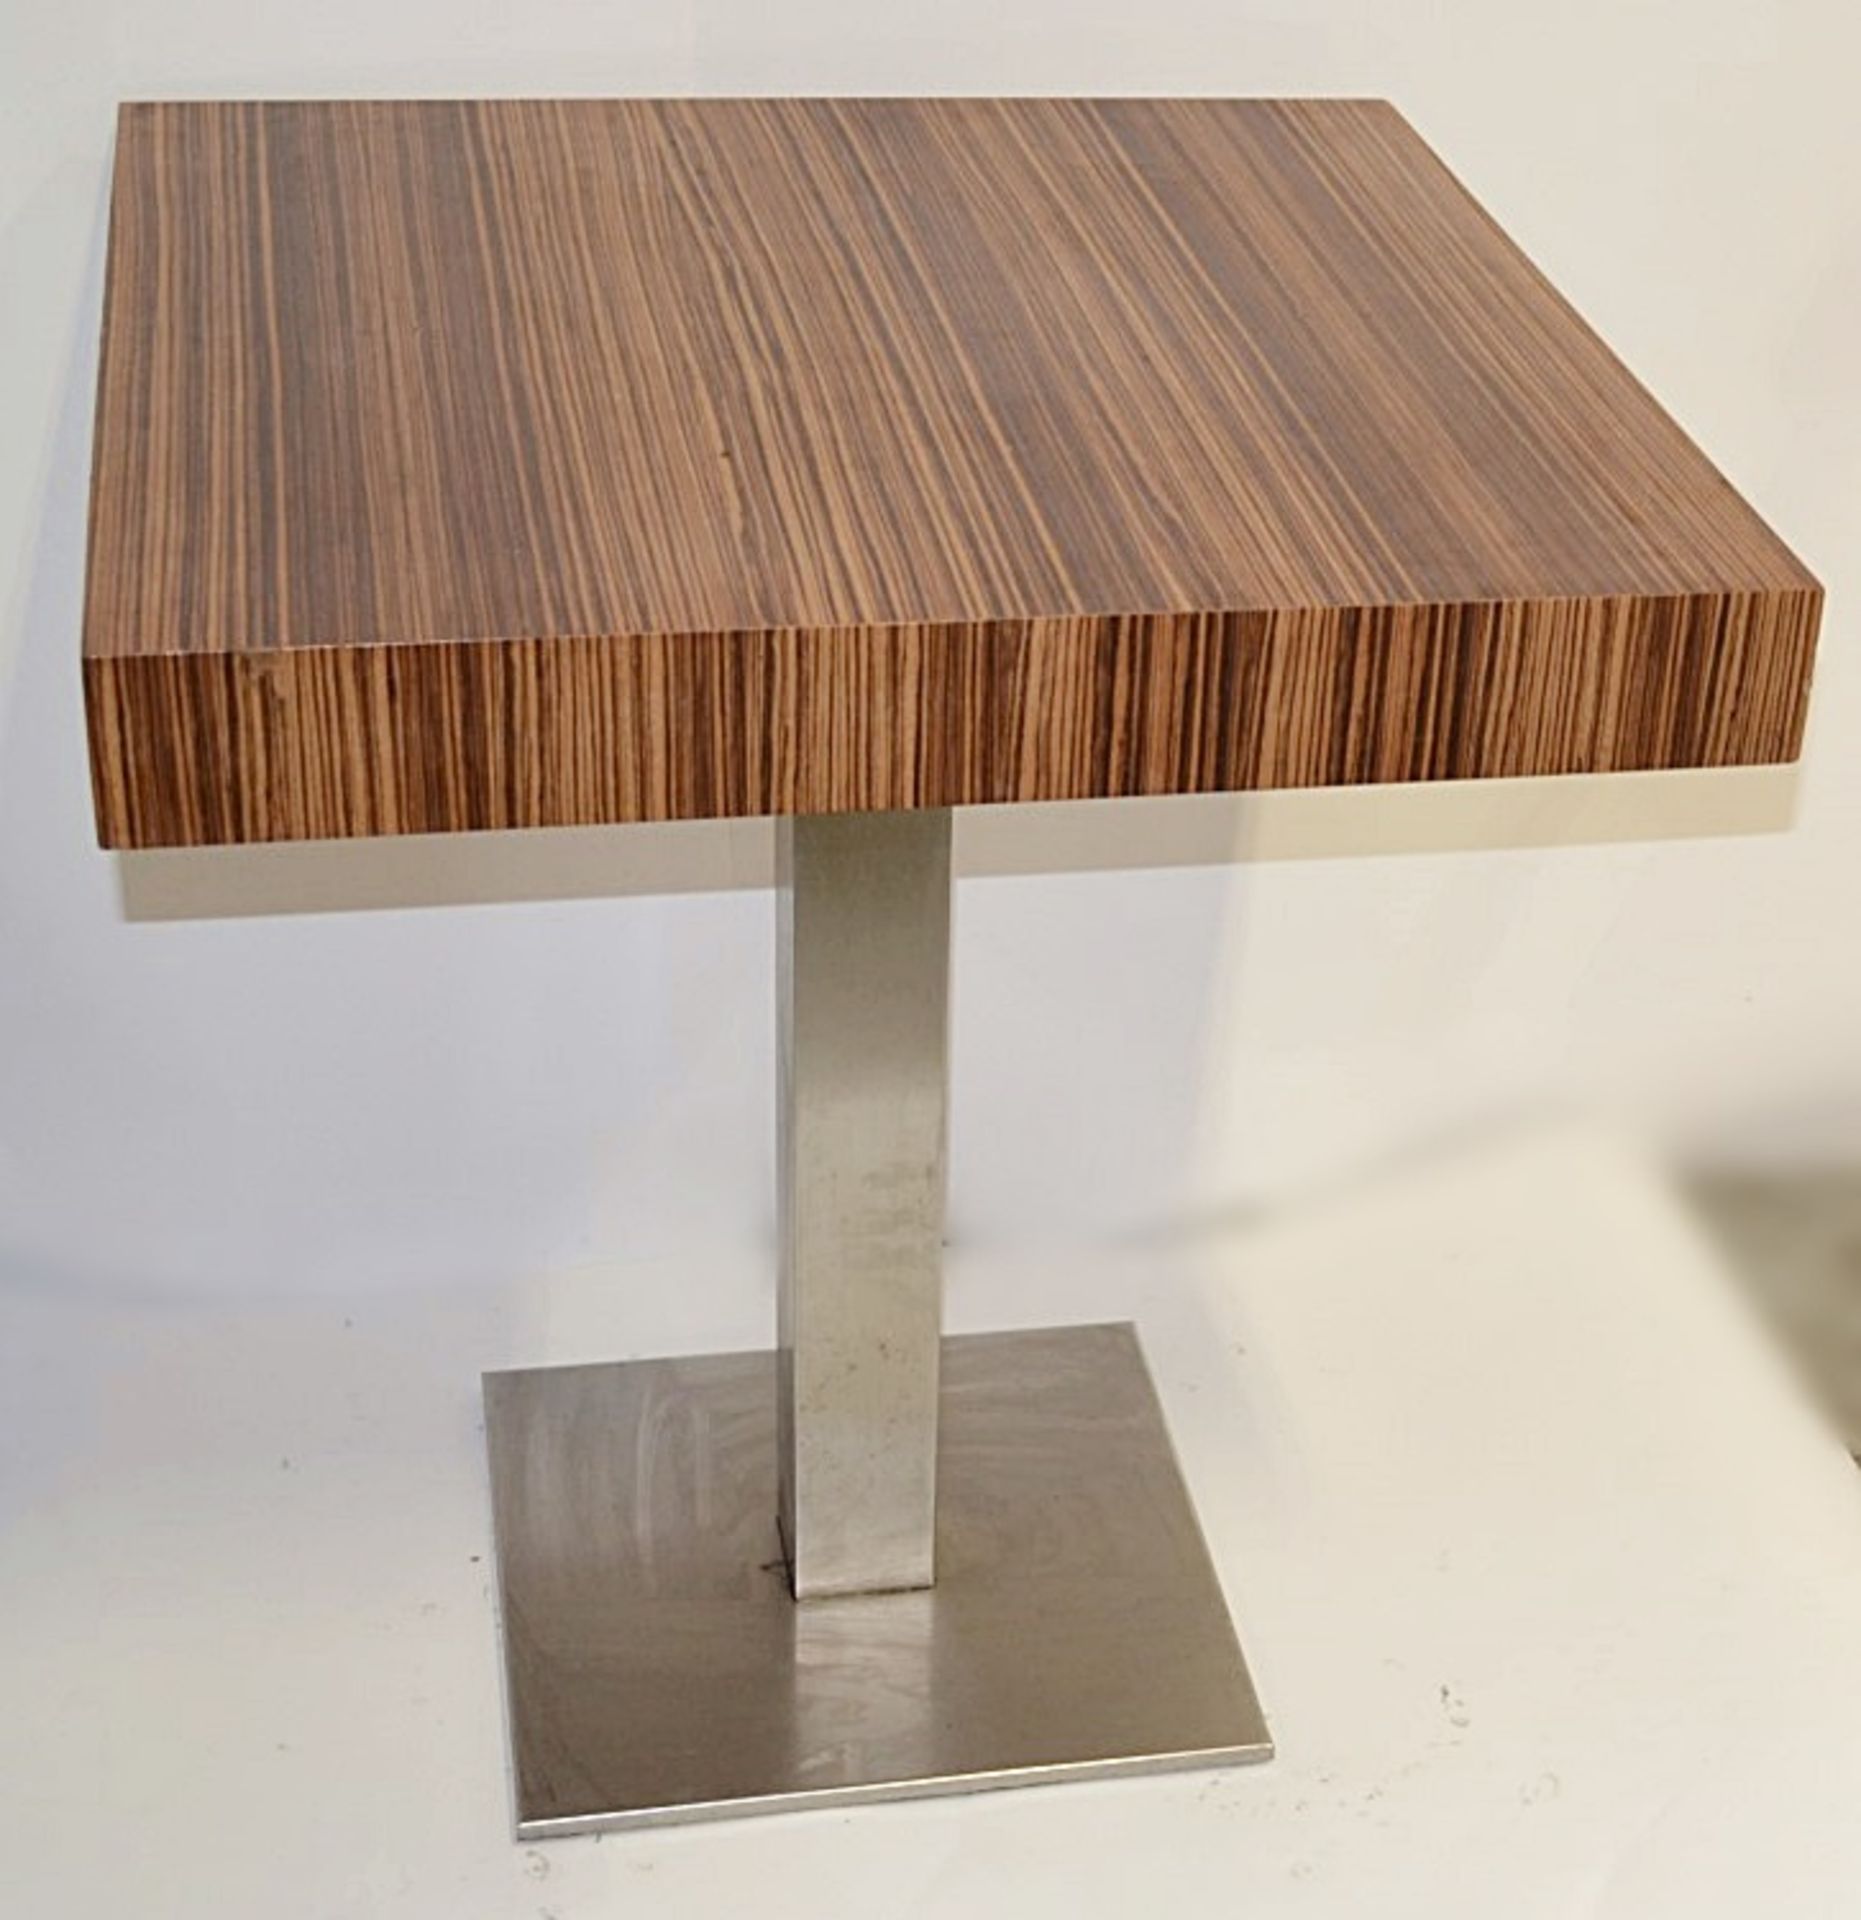 4 x Square Bistro Tables - Dimensions: H76 x W70 x D70cm - City Centre Restaurant Closure - Supplied - Image 2 of 5